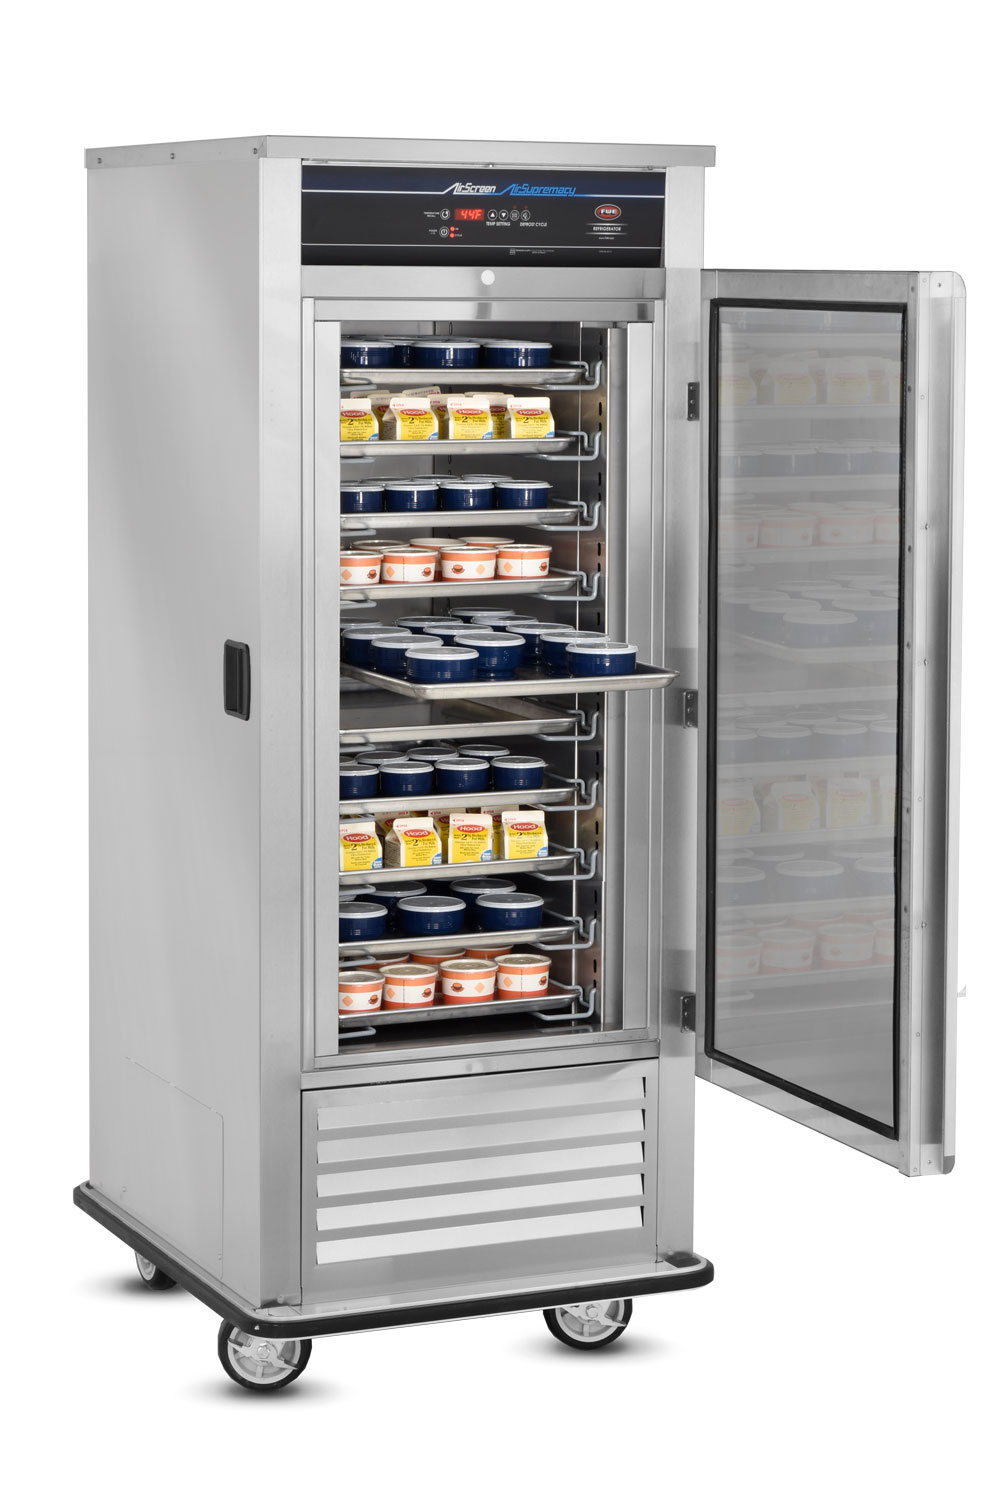 FWE / Food Warming Equipment Company's AirScreen Refrigerator Model ASU-10